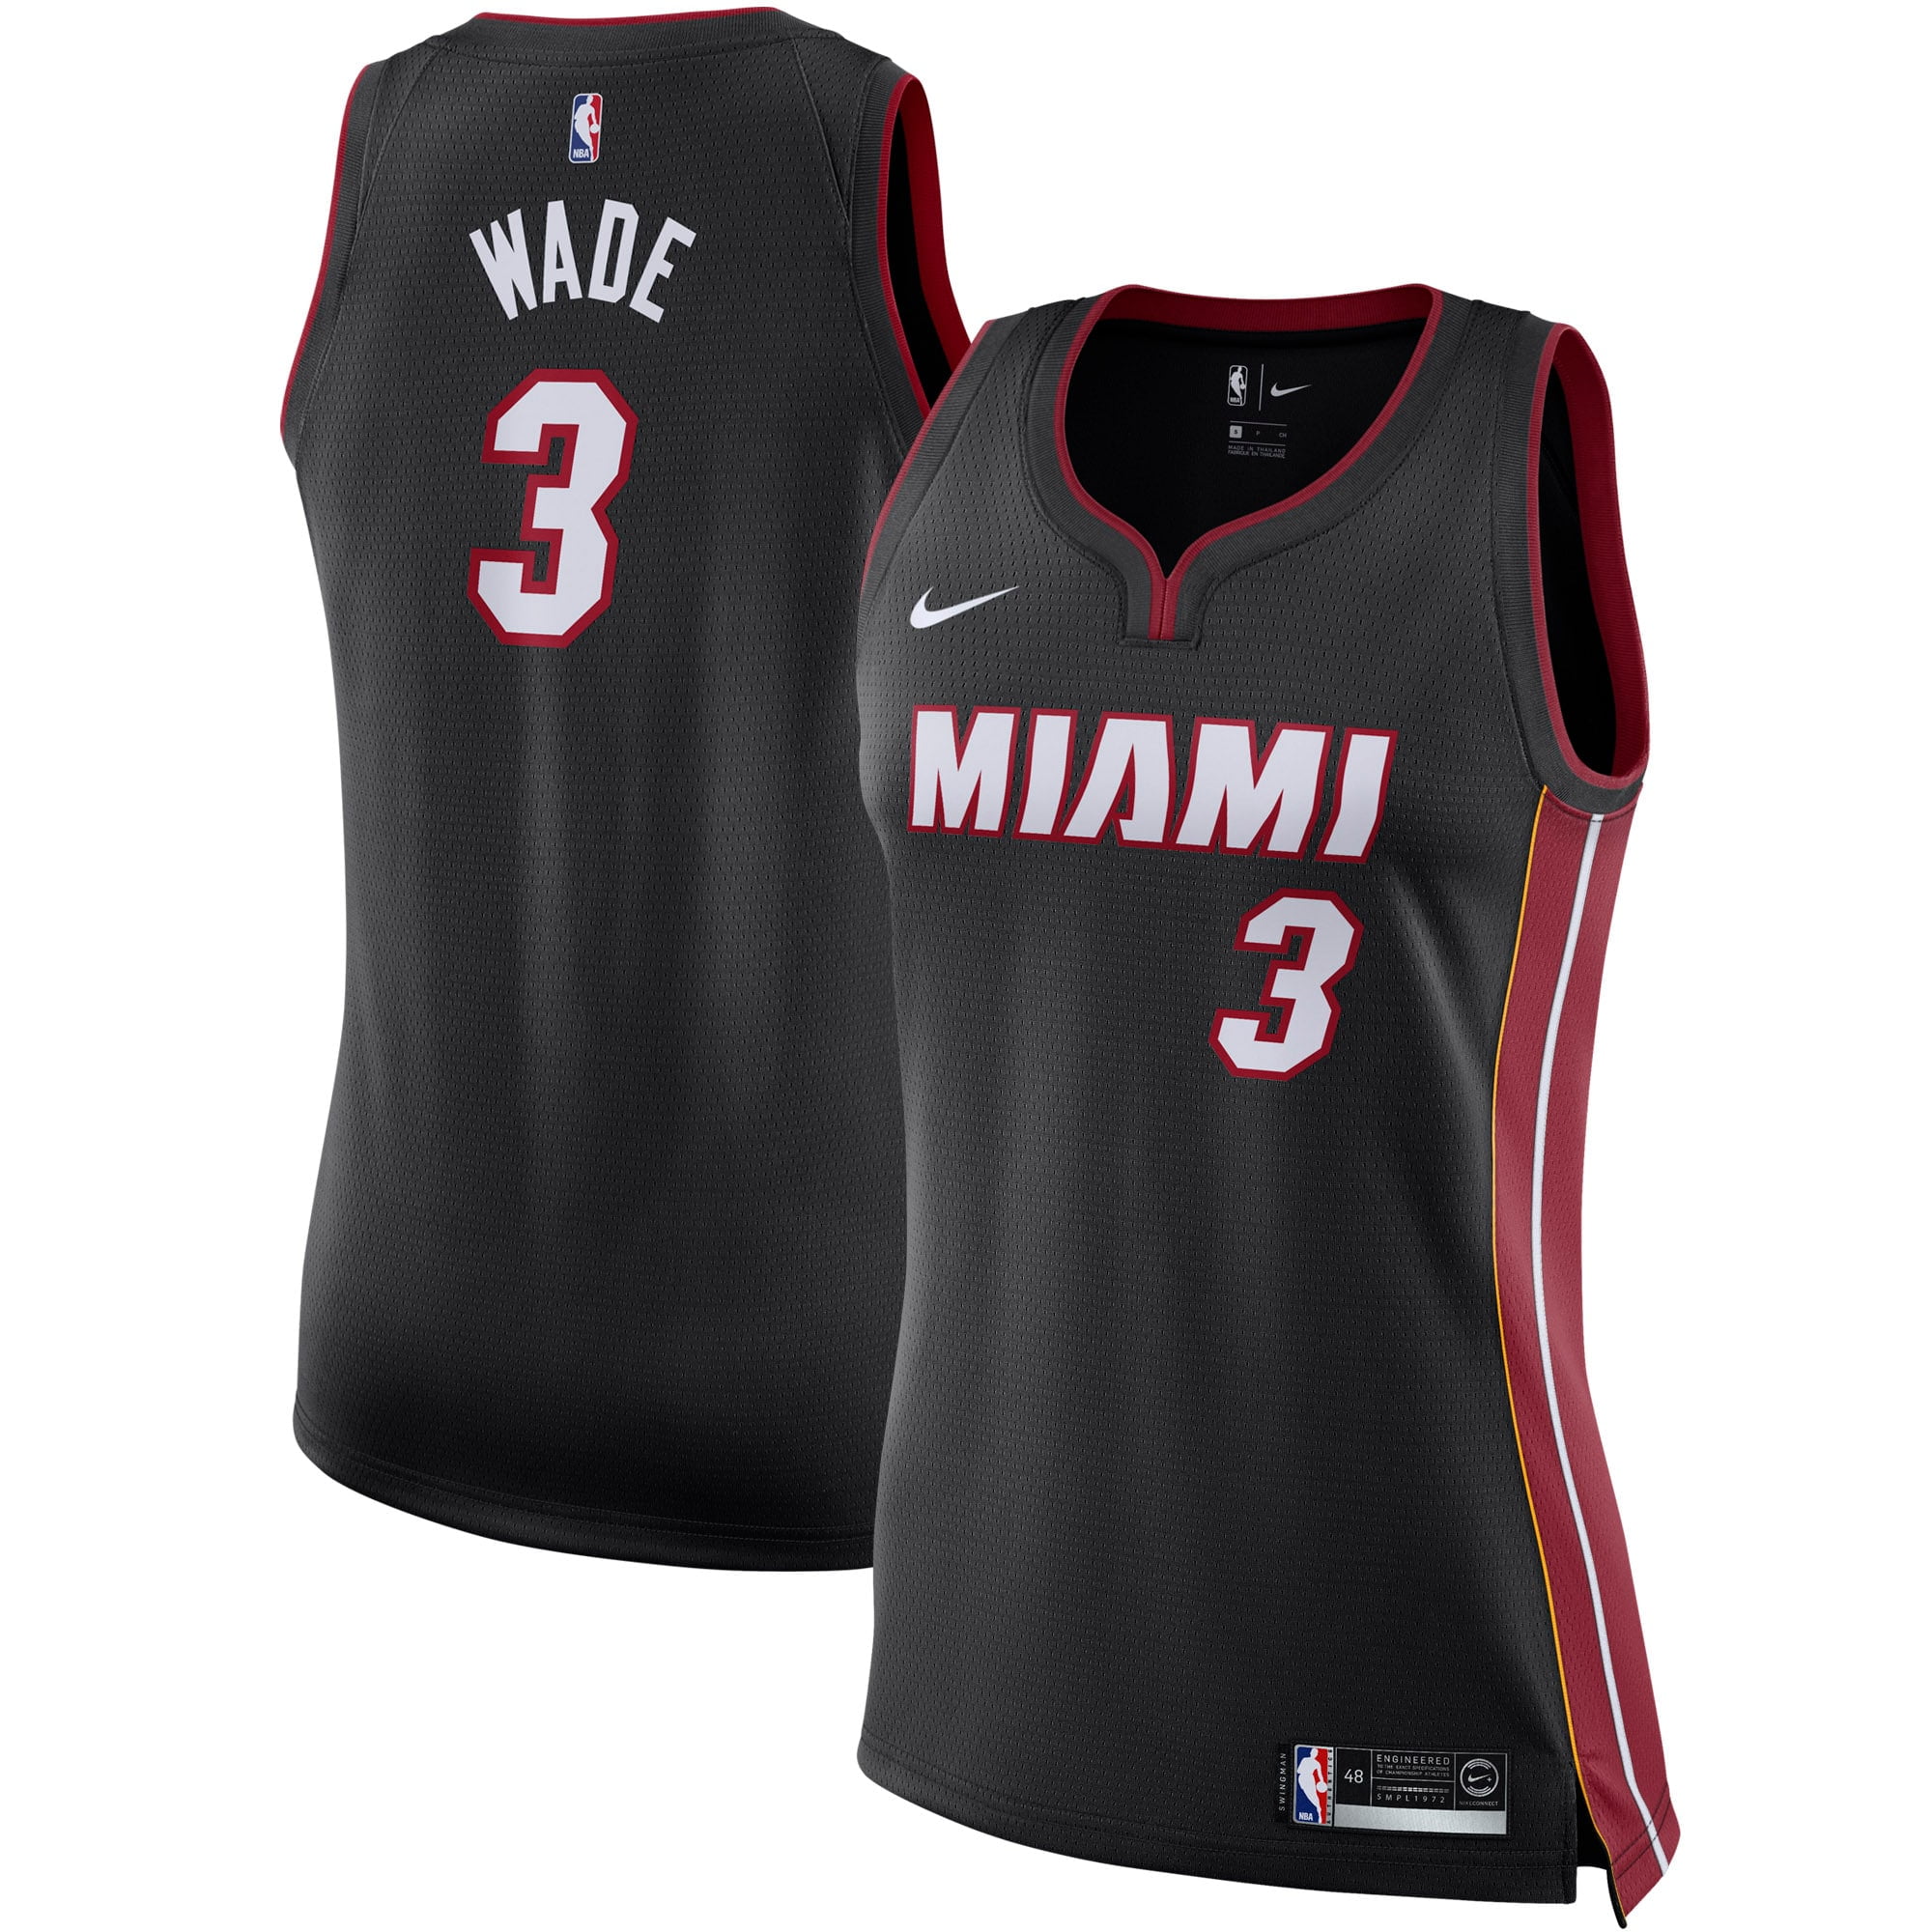 Fans Basketball Jerseys Suitable for Heat Wade 3 Basketball Jerseys Basketball Jersey Set Mens and Womens Sleeveless Basketball Shirts